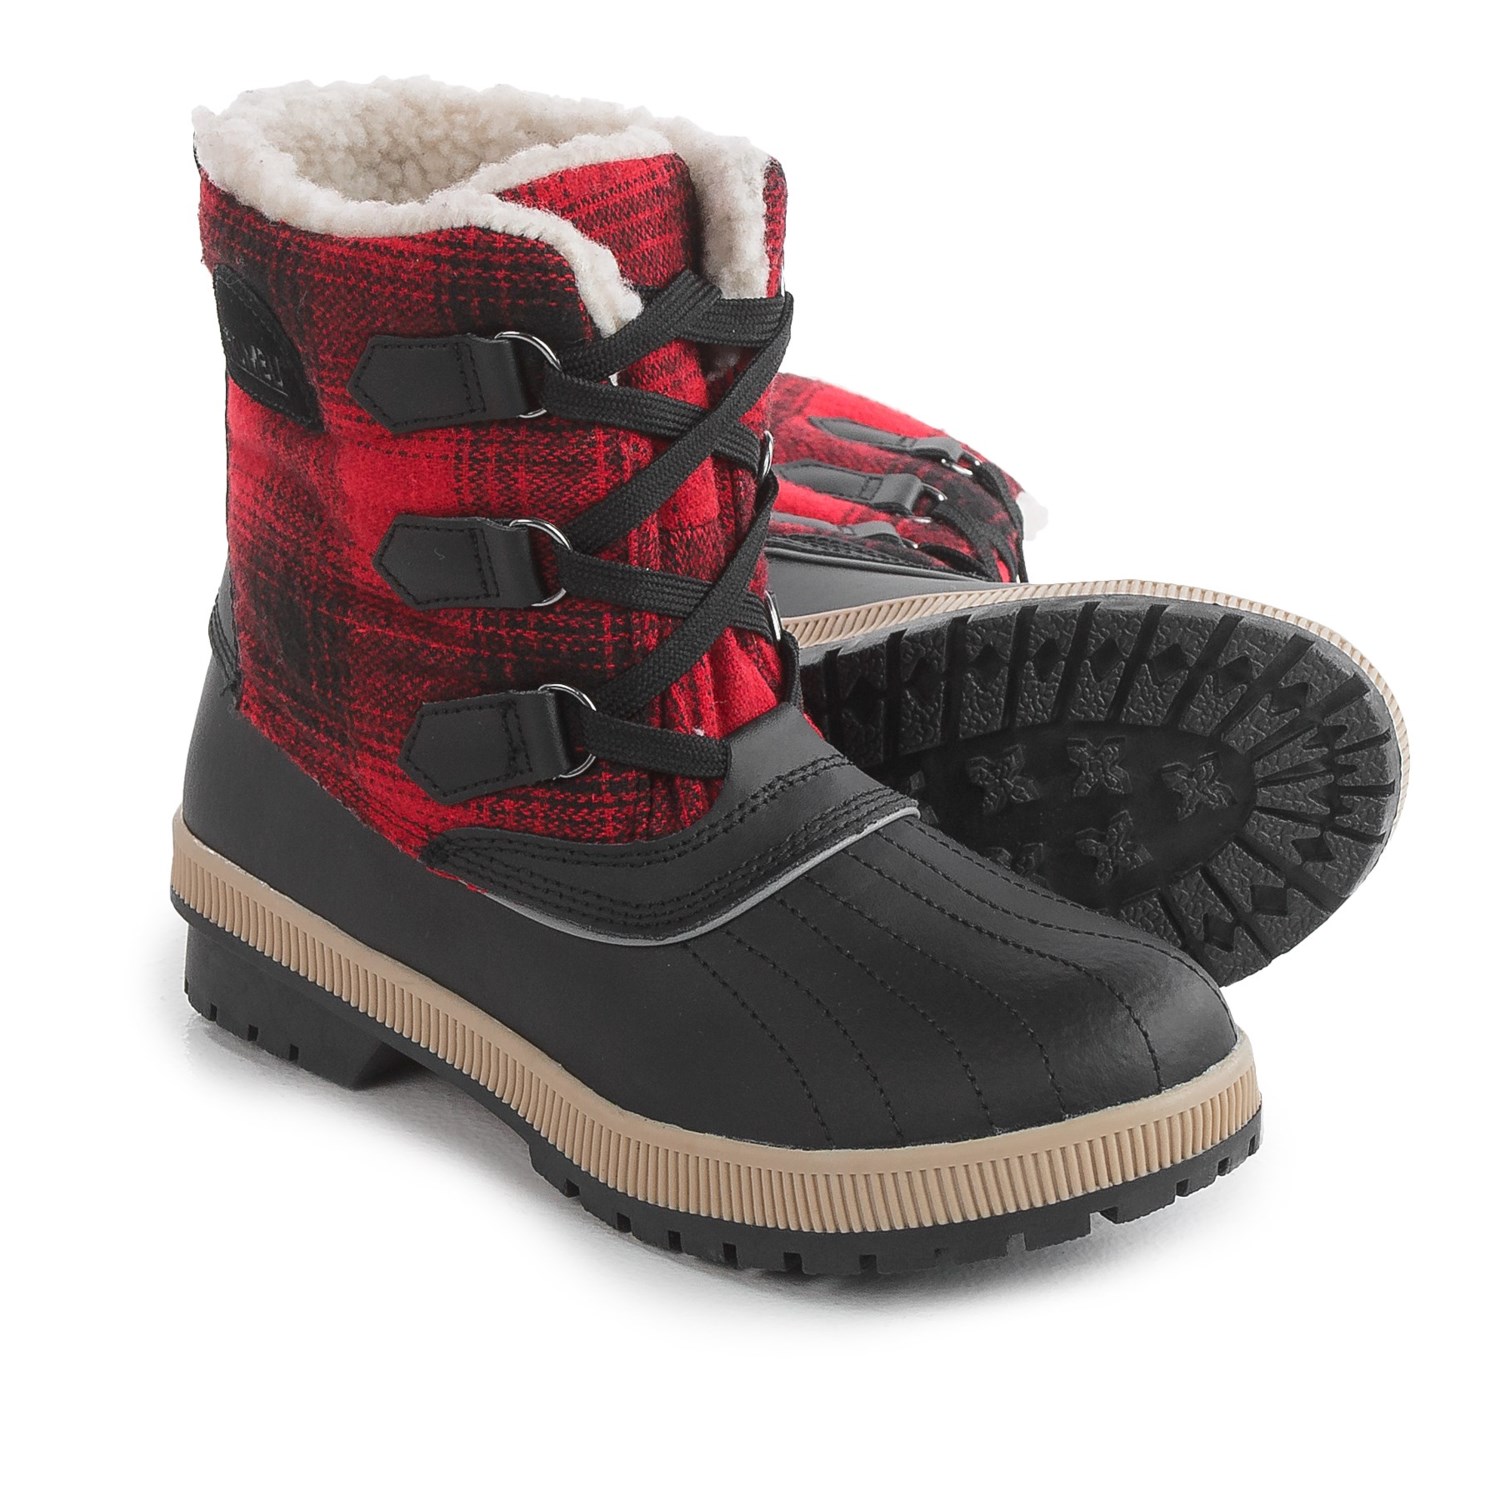 Women's Khombu Tread Winter Boots | Division of Global Affairs